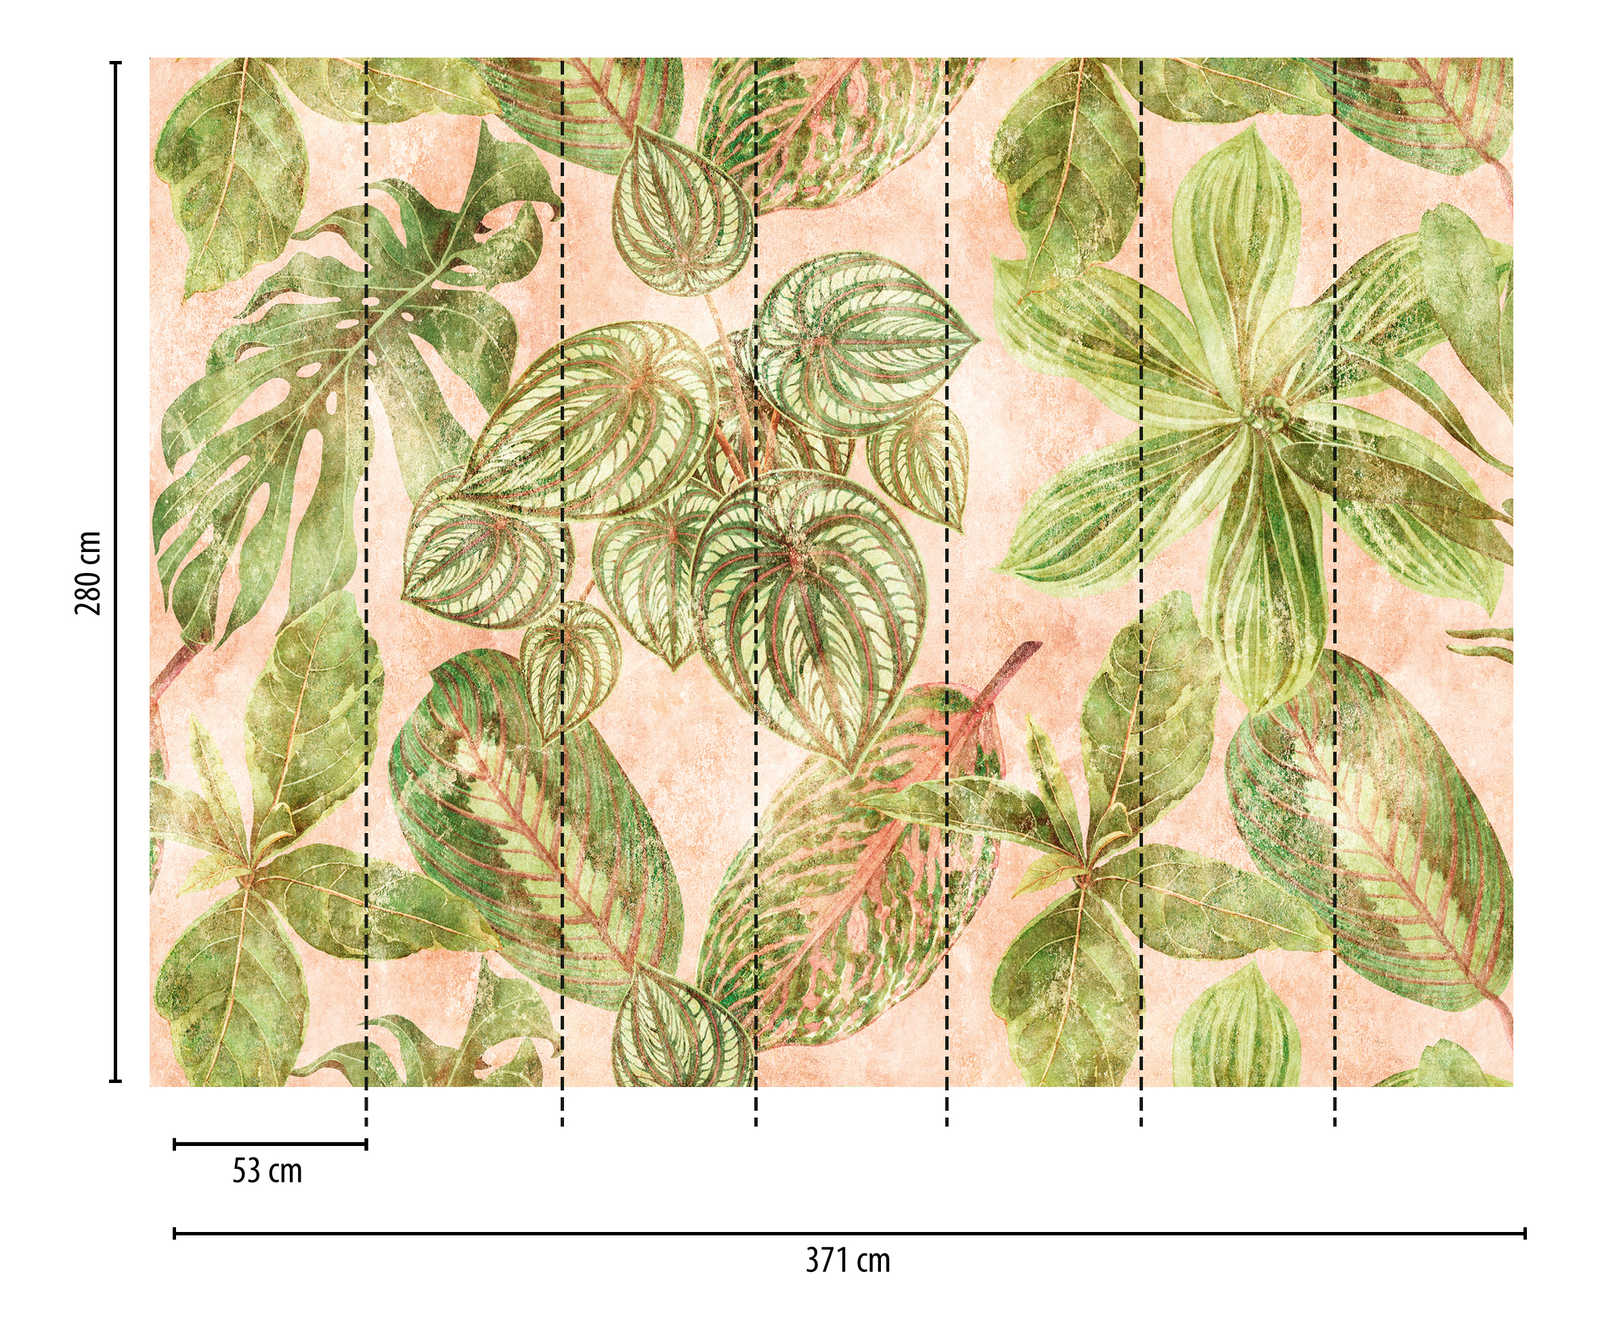             Wallpaper novelty | leaves wallpaper with XXL motif in vintage design
        